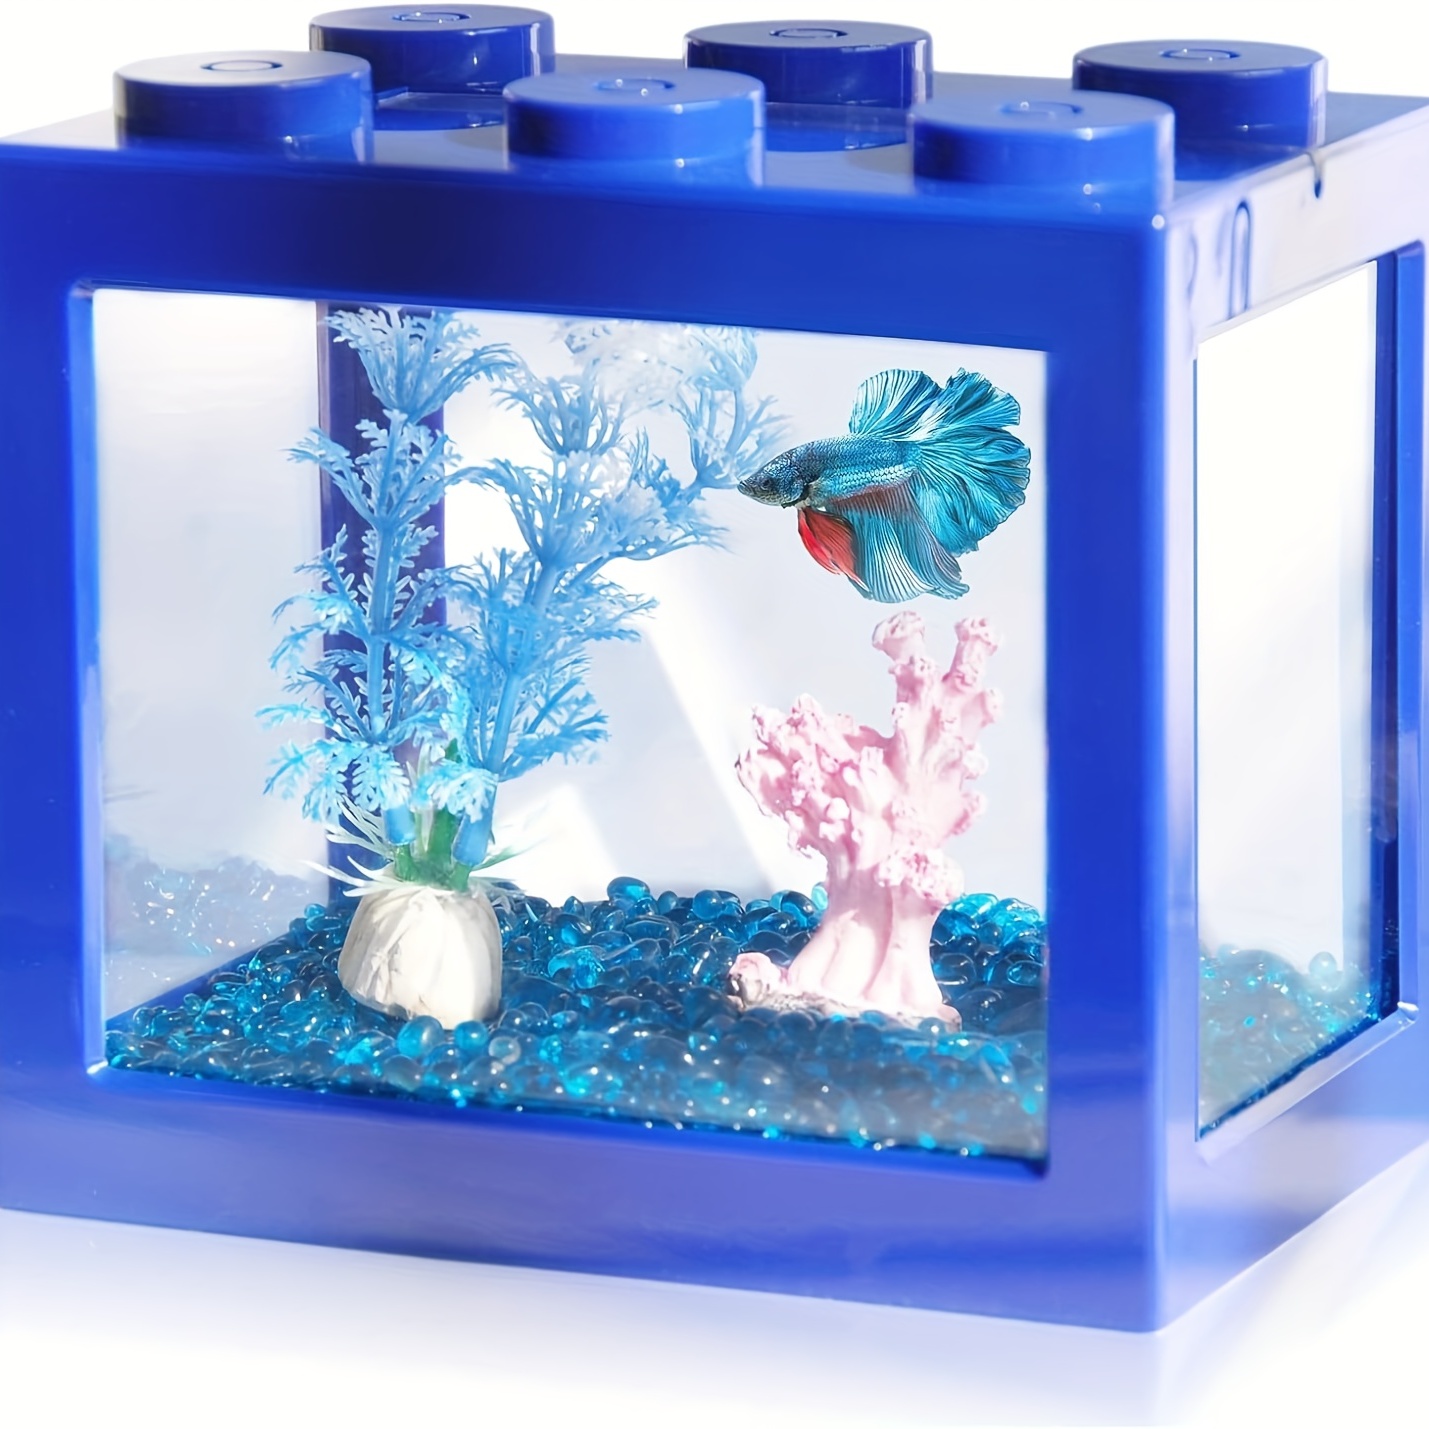 Small Betta Fish Tank, Aquarium Tank Kit with LED Lighting, 3/5